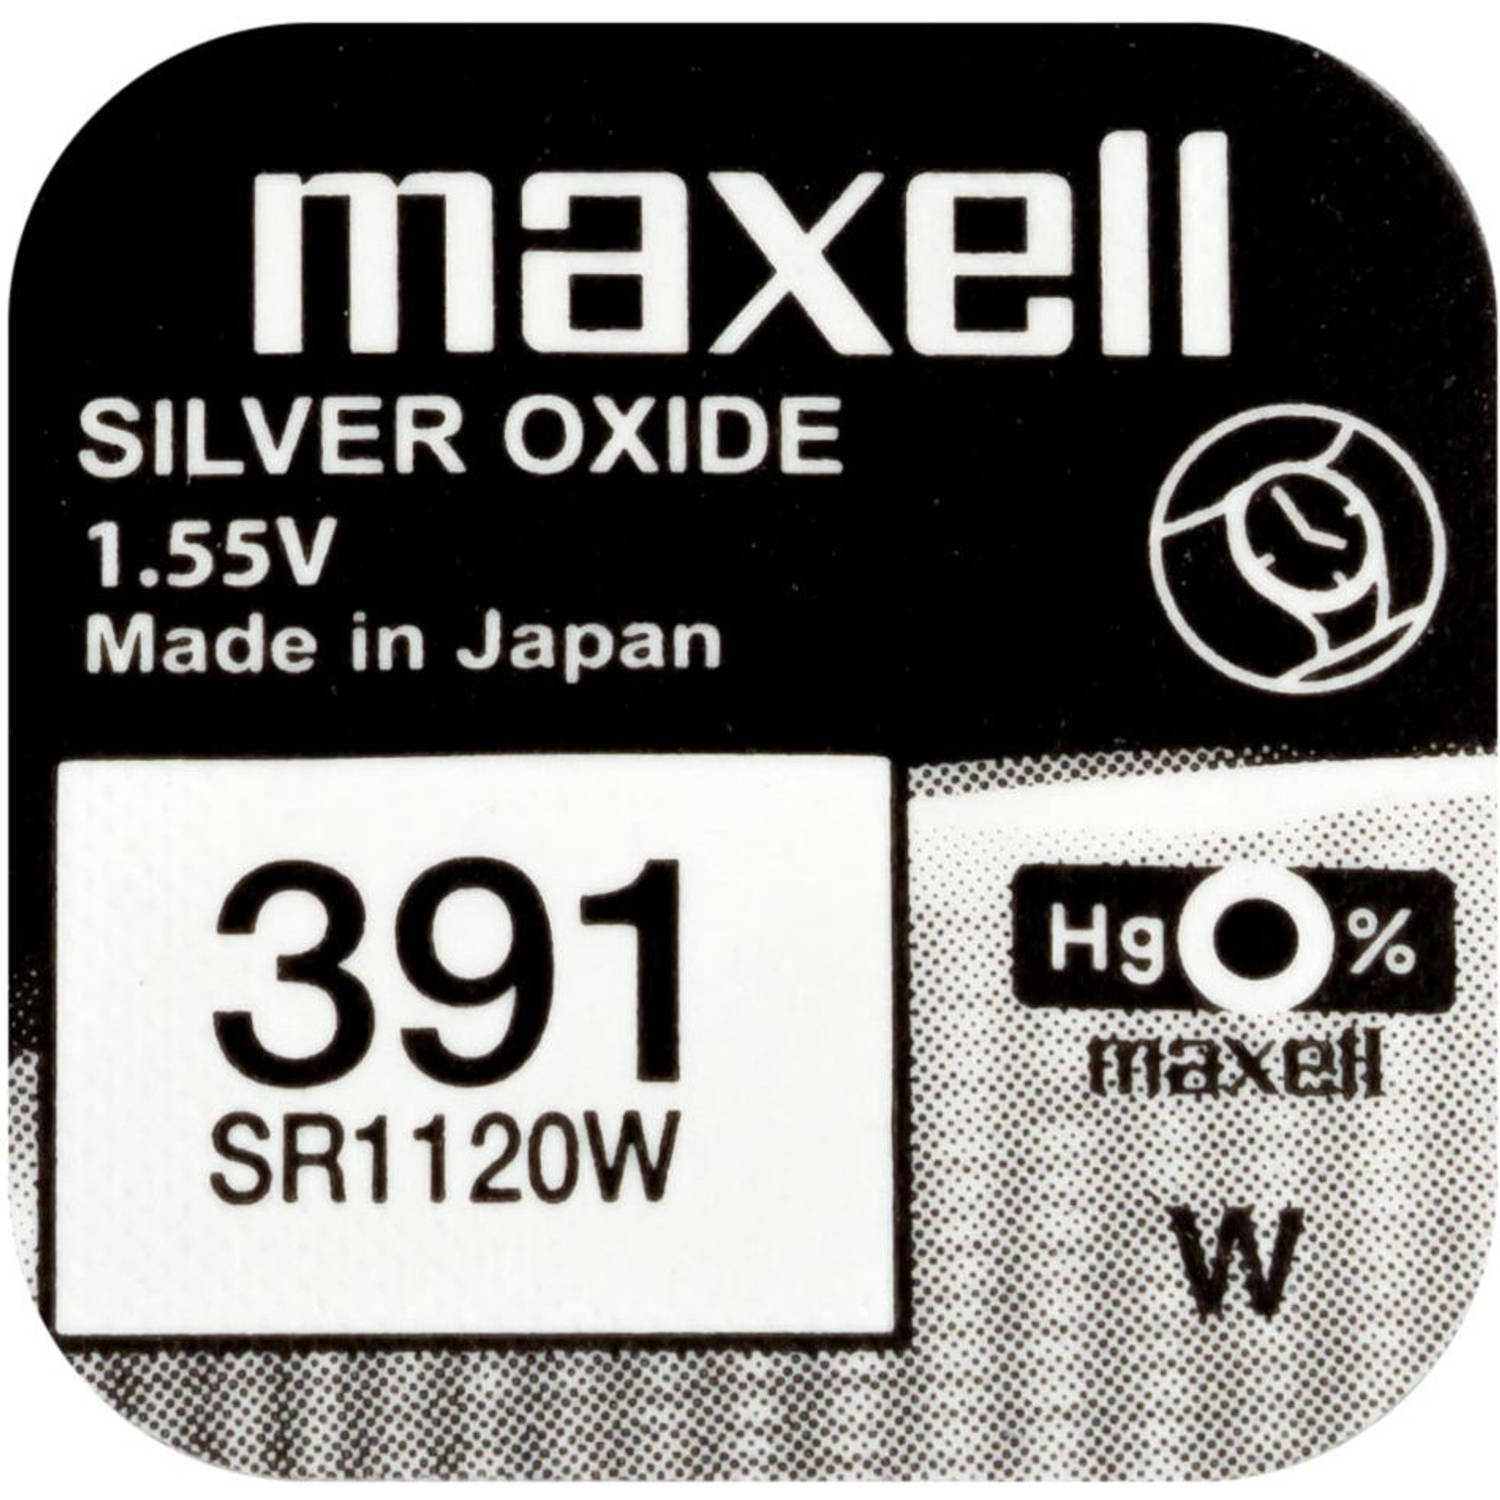 Maxell Silver Oxide 391 blister 1